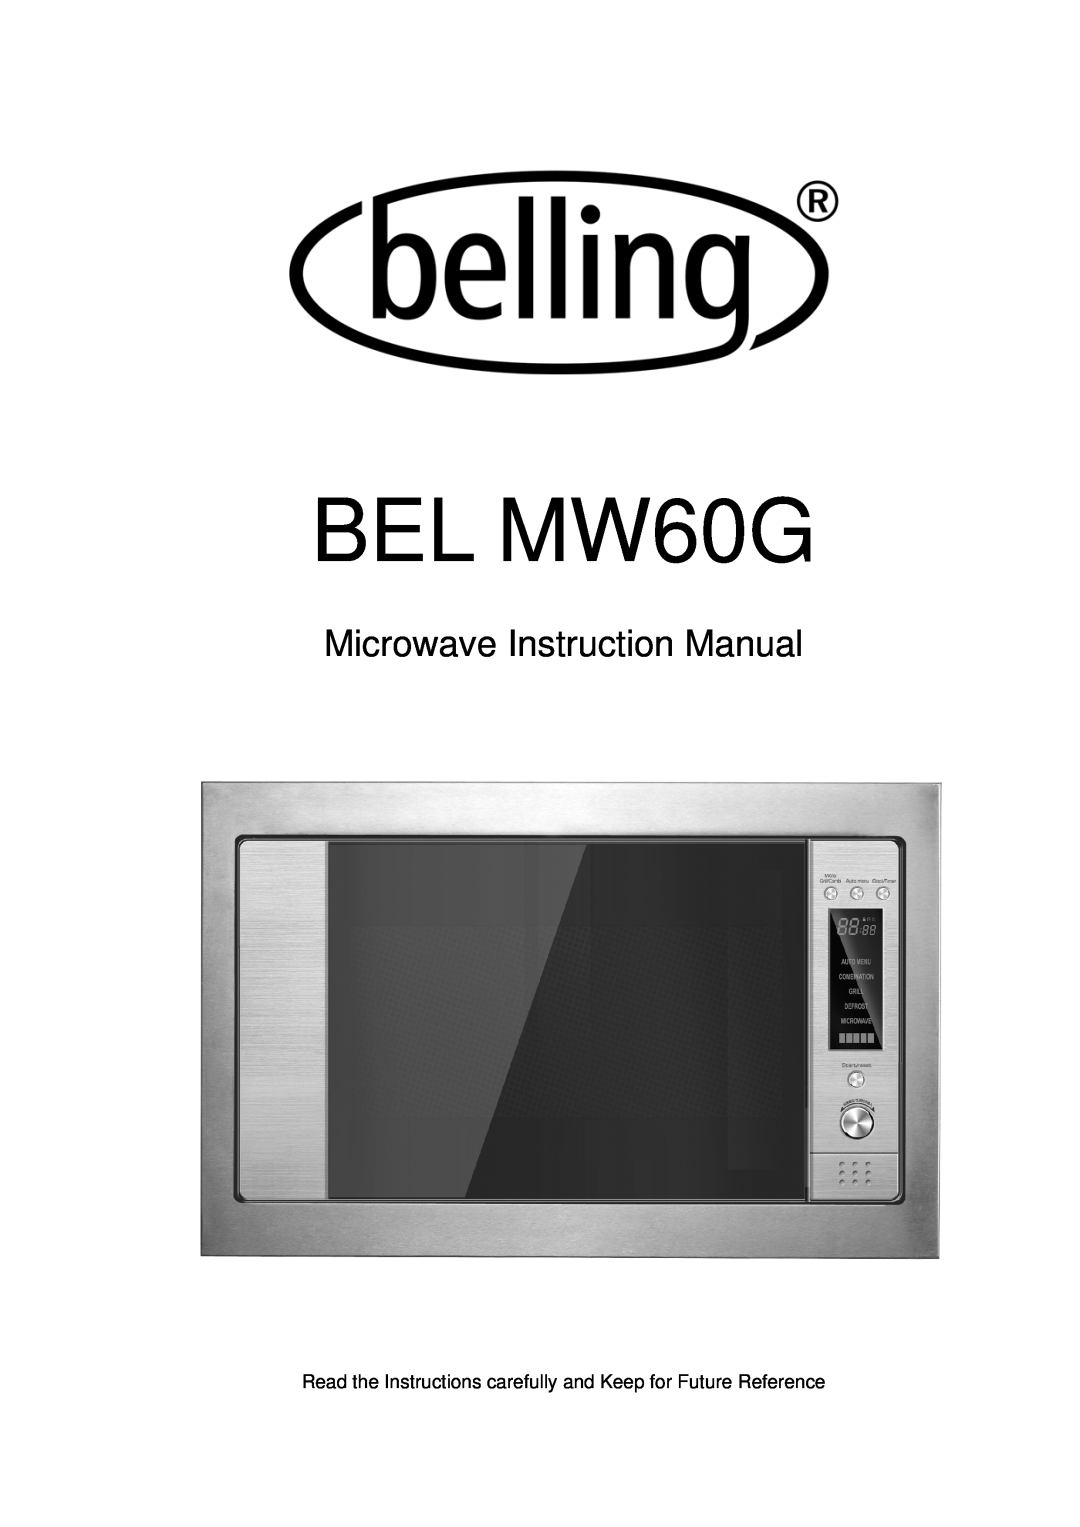 Glen Dimplex Home Appliances Ltd BEL MW60G instruction manual Microwave Instruction Manual 